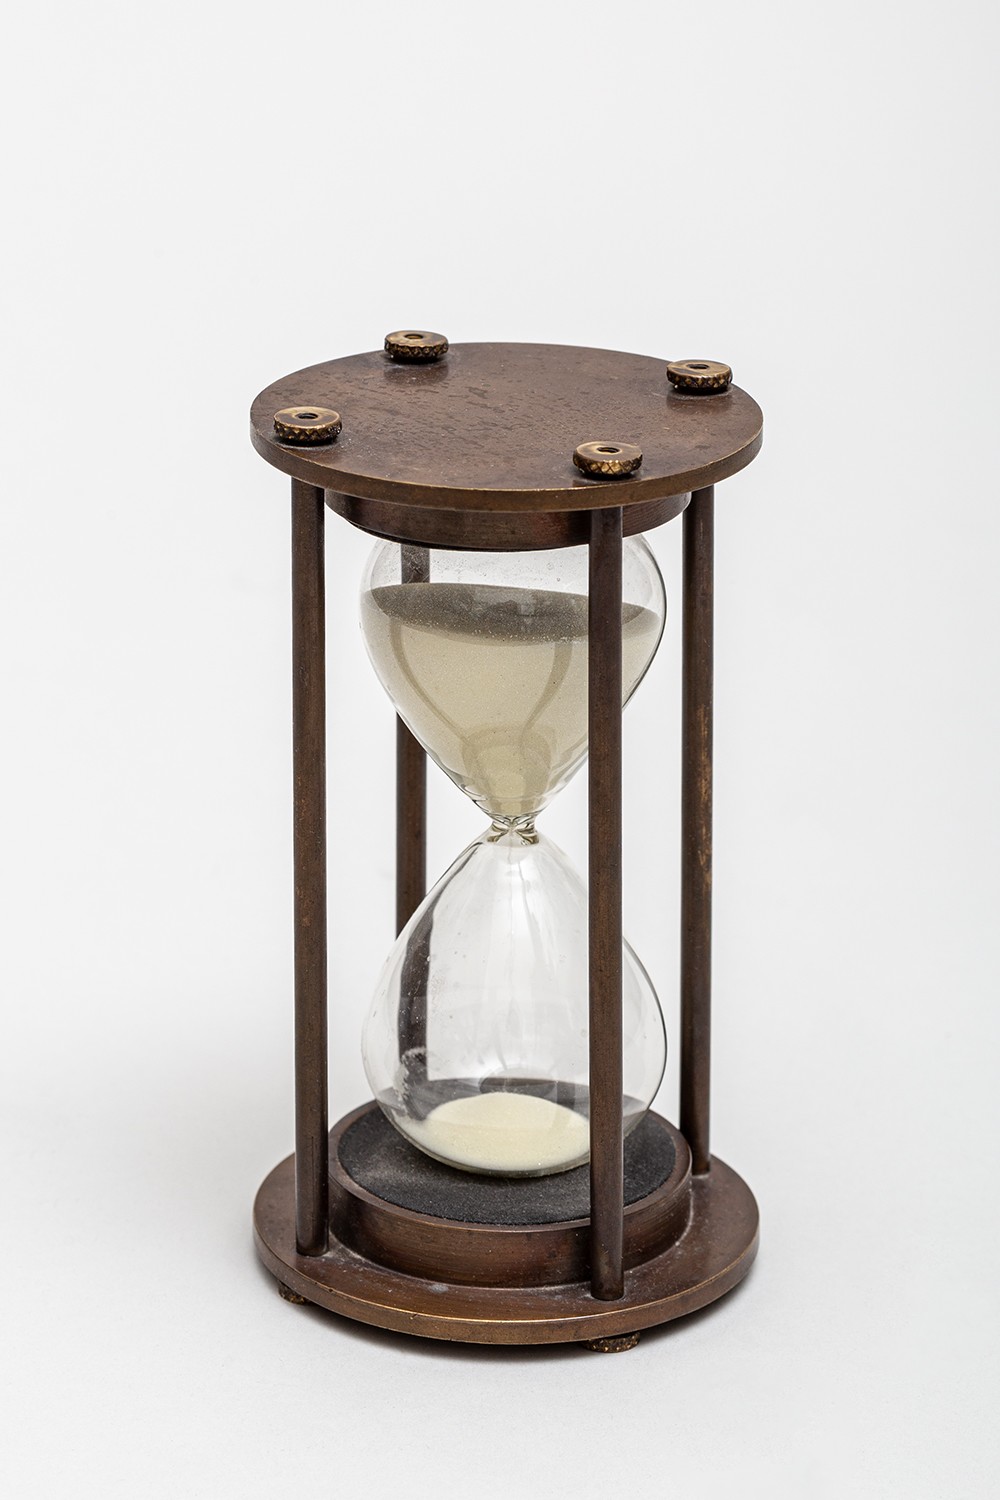 45-Minuten-Sanduhr, um 1900 (Schulmuseum Reckahn CC BY-NC-SA)